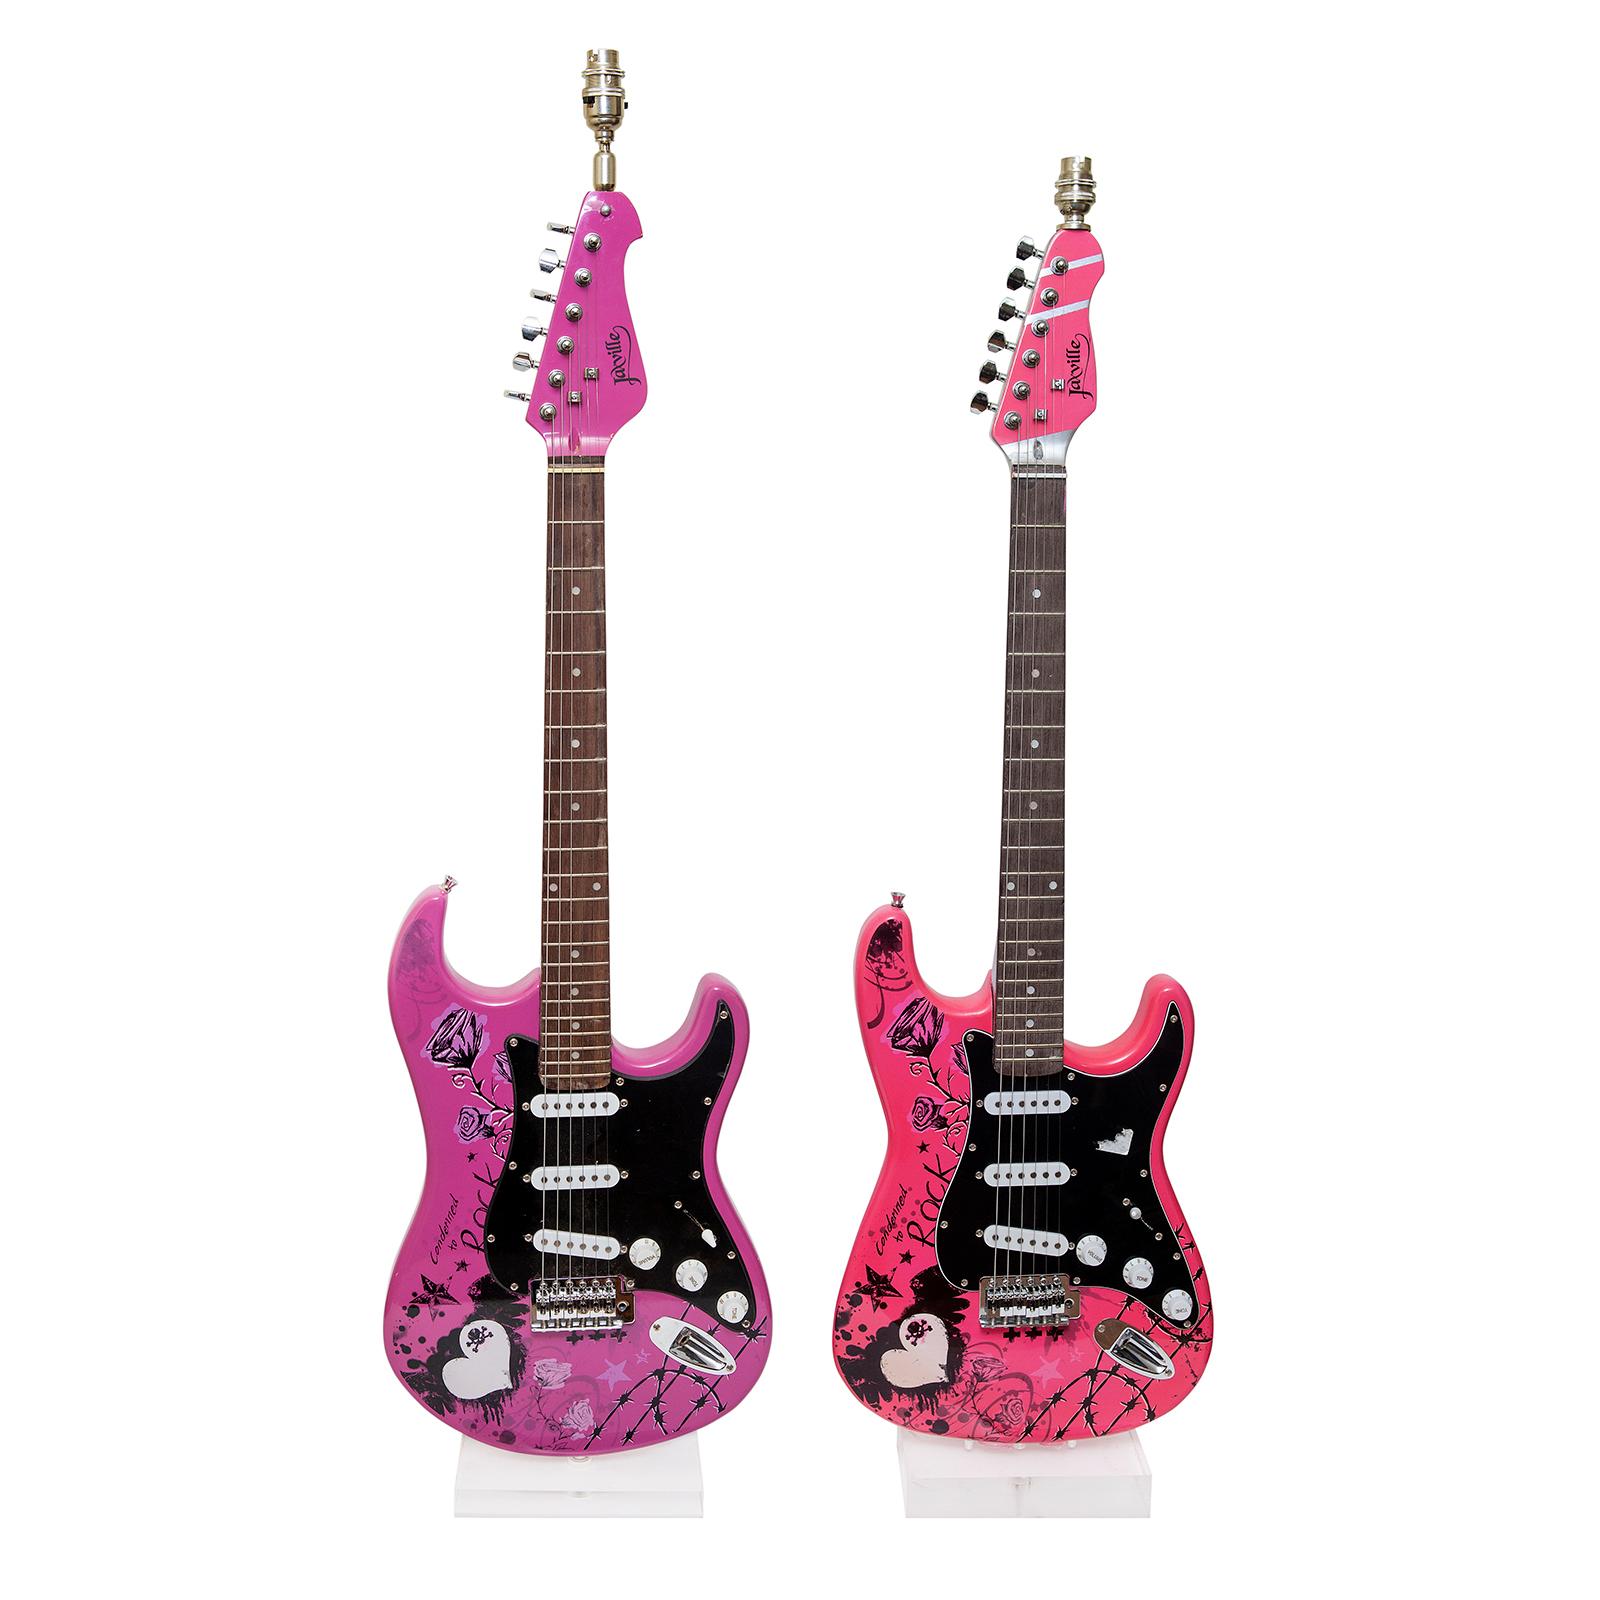 Lampe Gitarren Electric Punk Bubble Gum Pink, verchromter Ahornholz für Rock & Roll (Holz) im Angebot